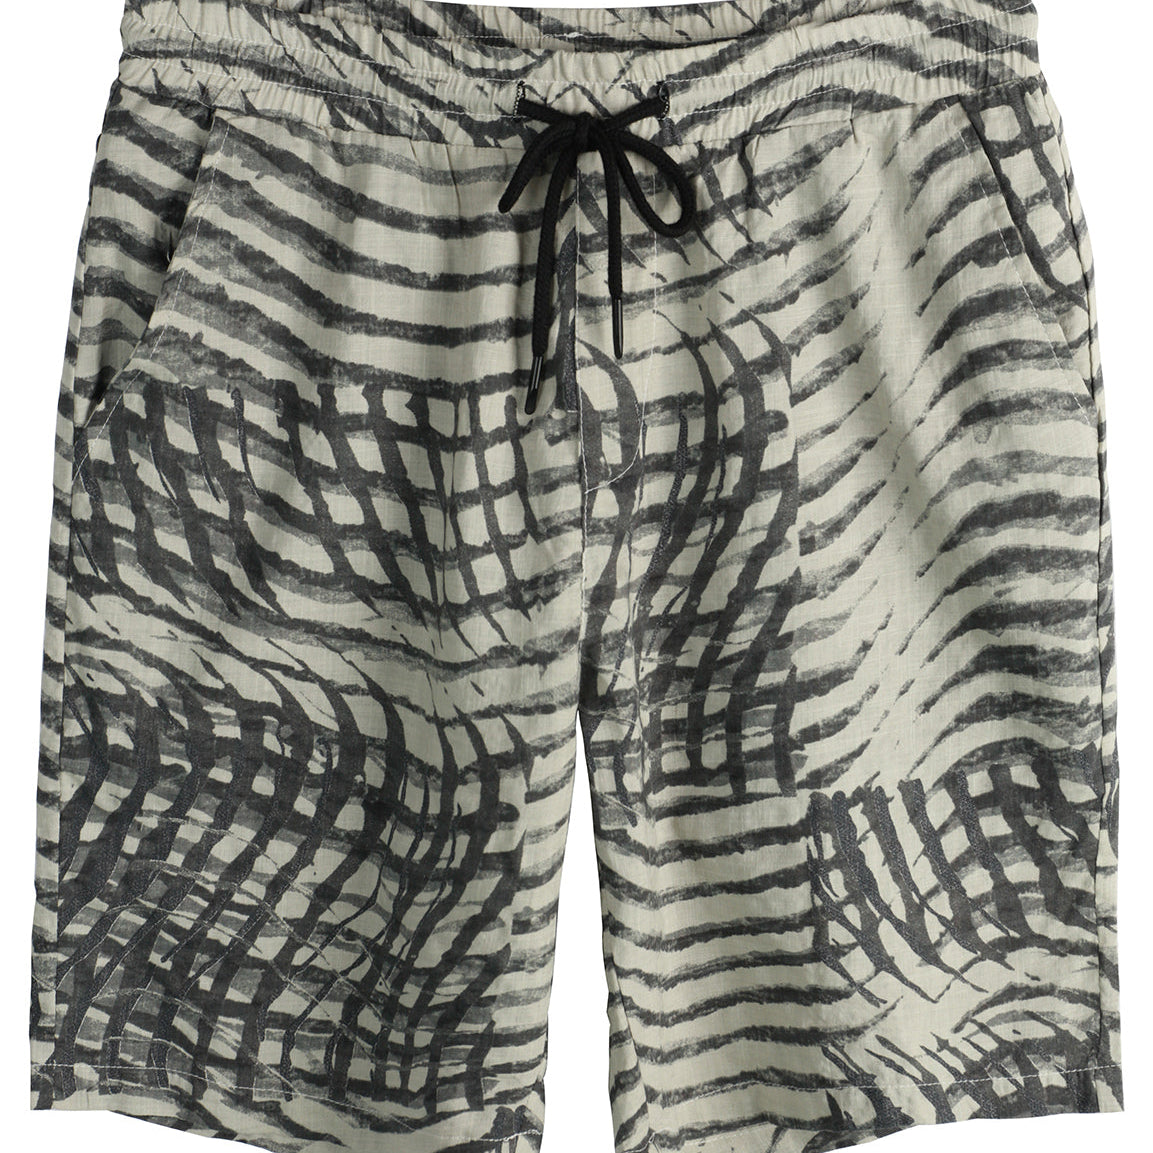 Men's Retro Casual Striped Cotton Breathable Summer Shorts